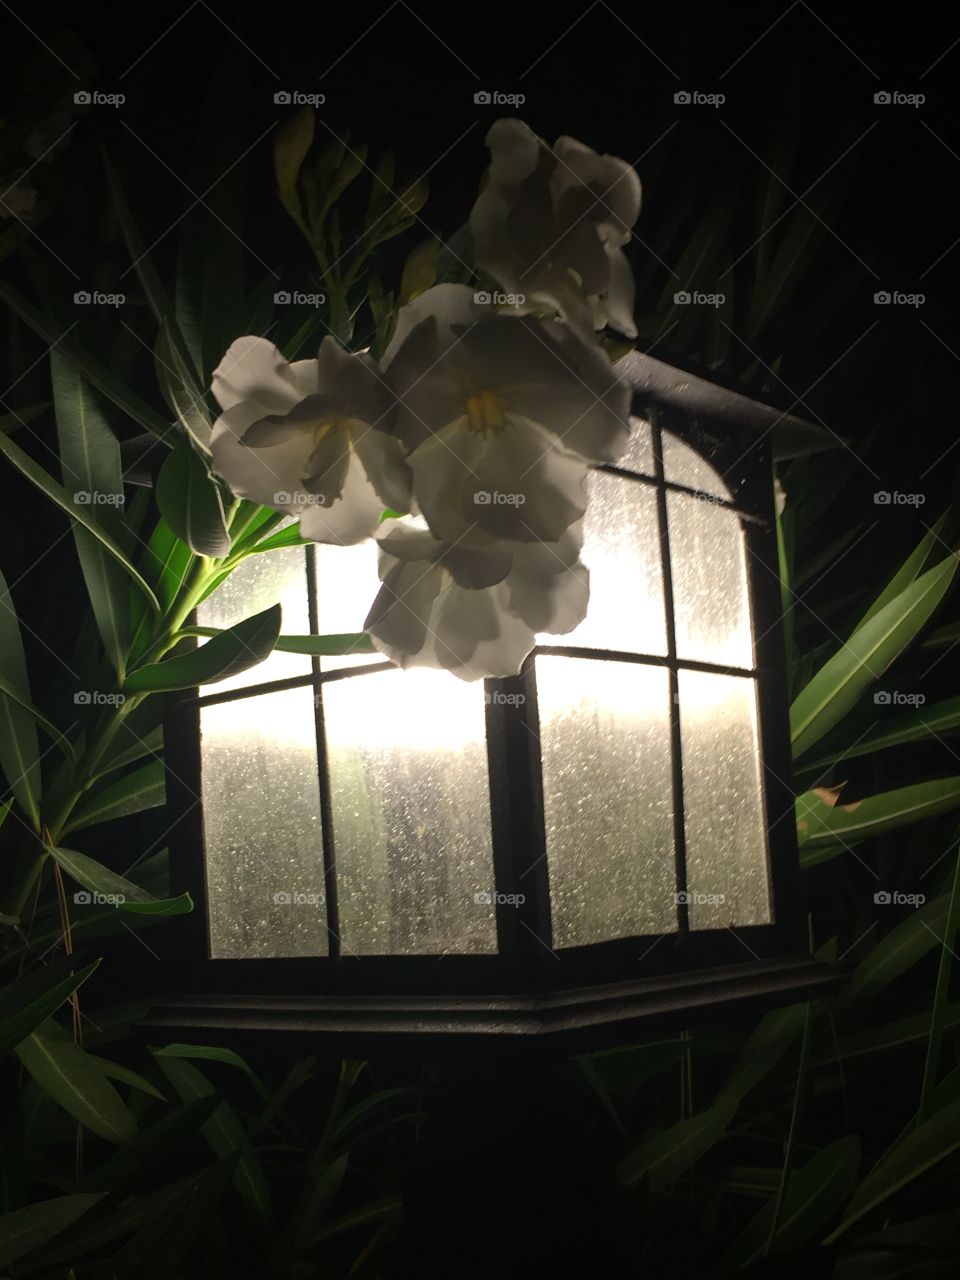 Flower and Lantern